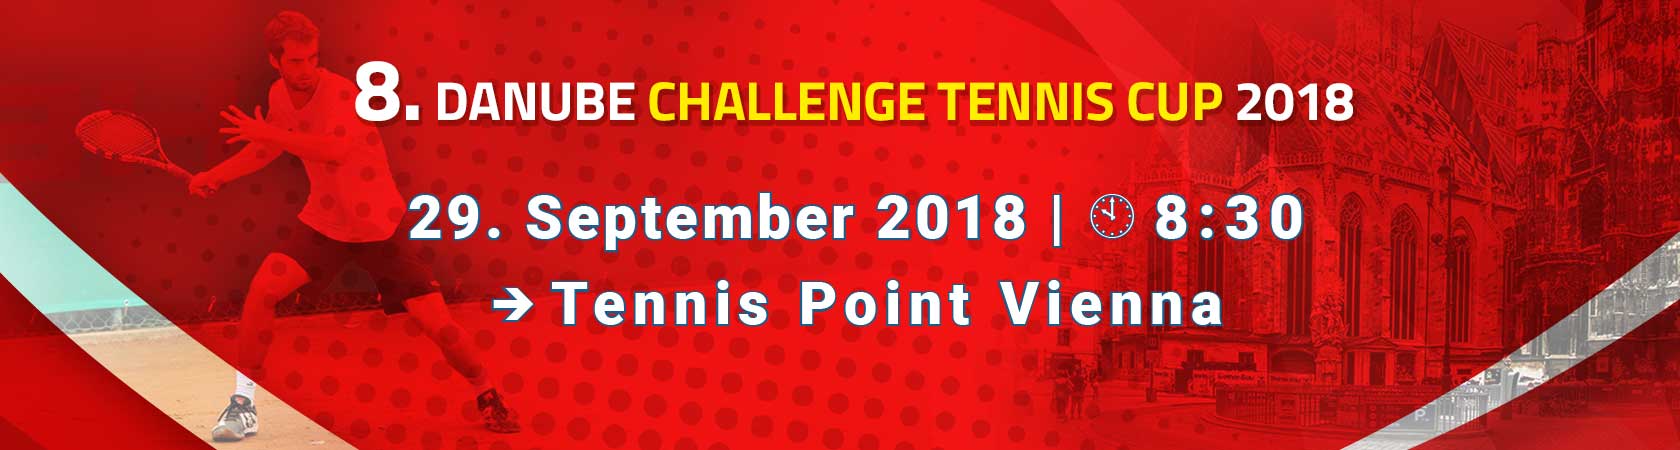 8. Danube Challenge Tennis Cup 2018 Viede 